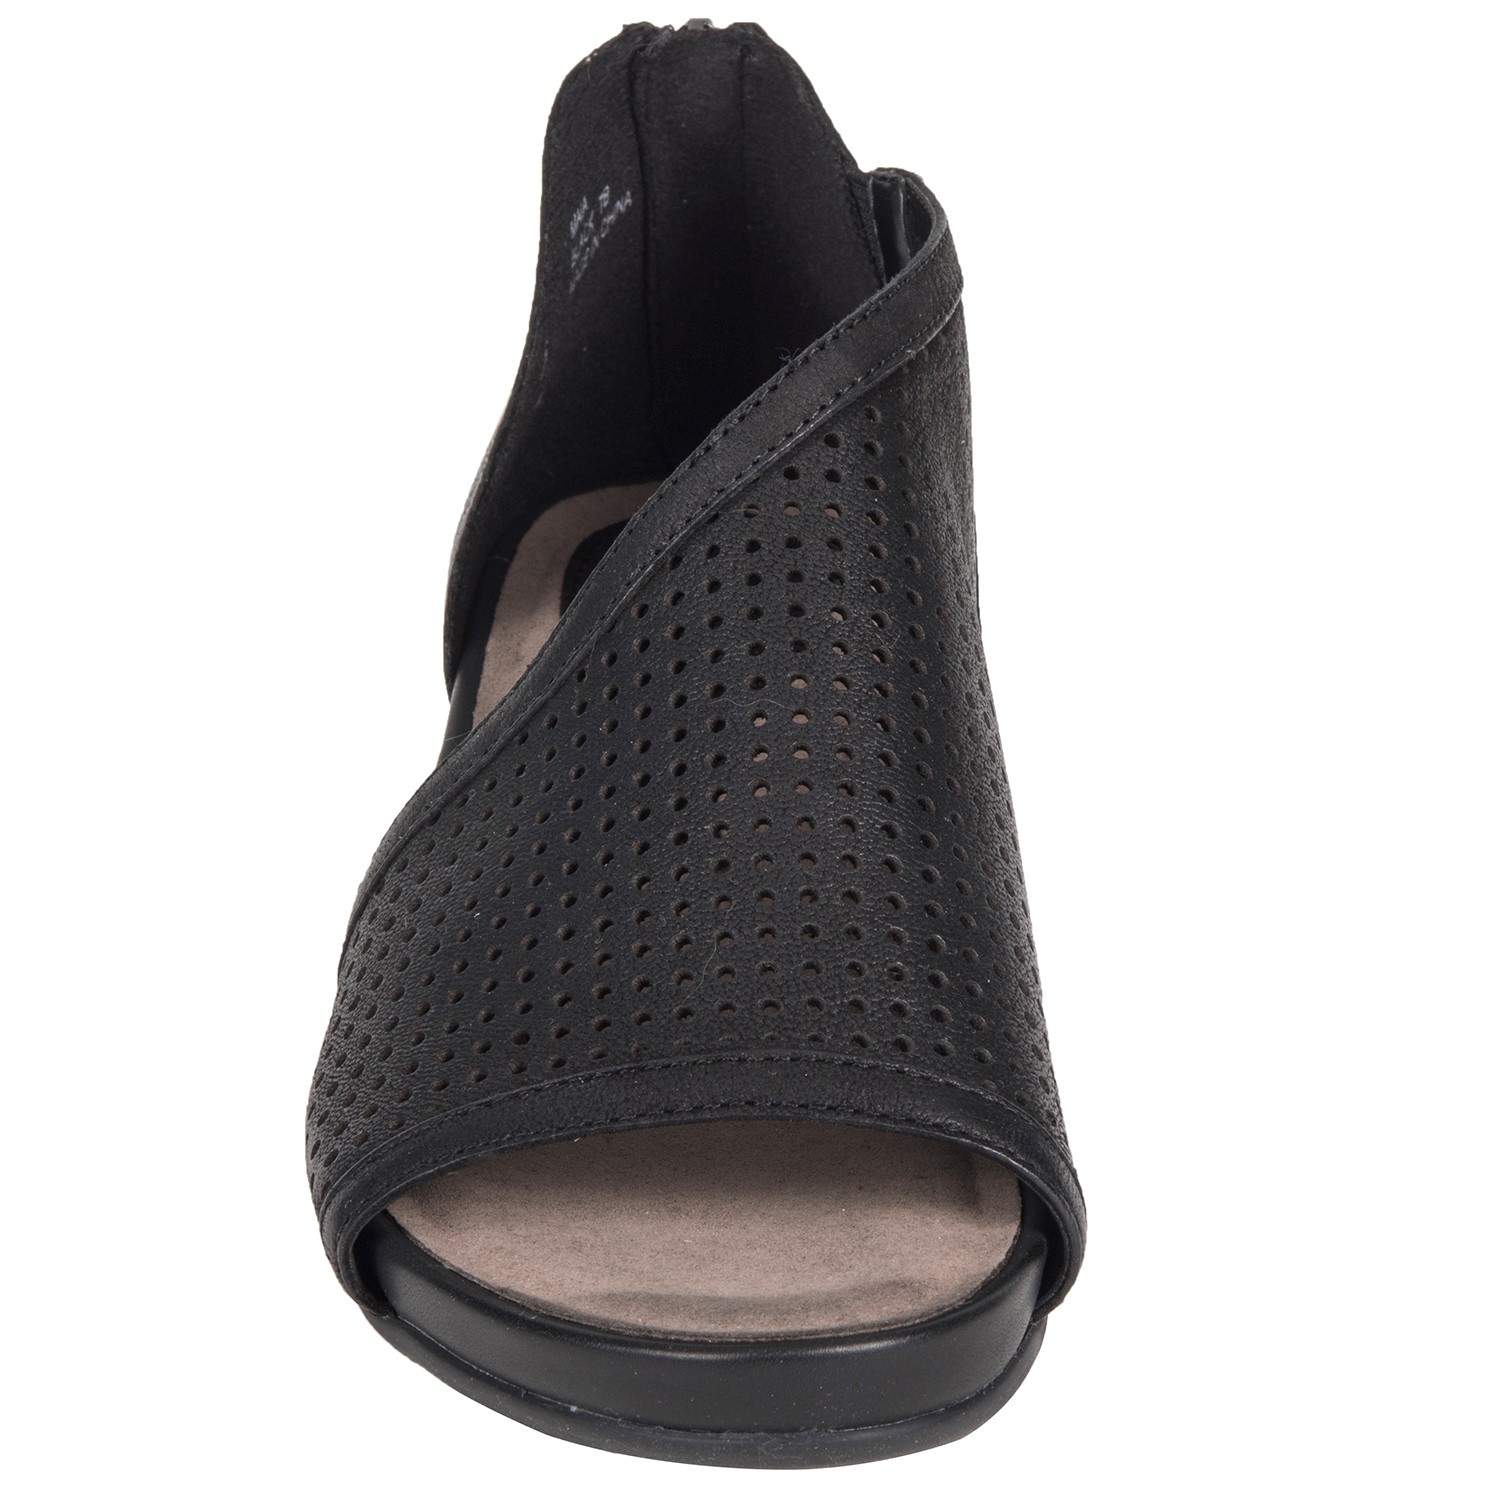 comfortable black dress shoes for women